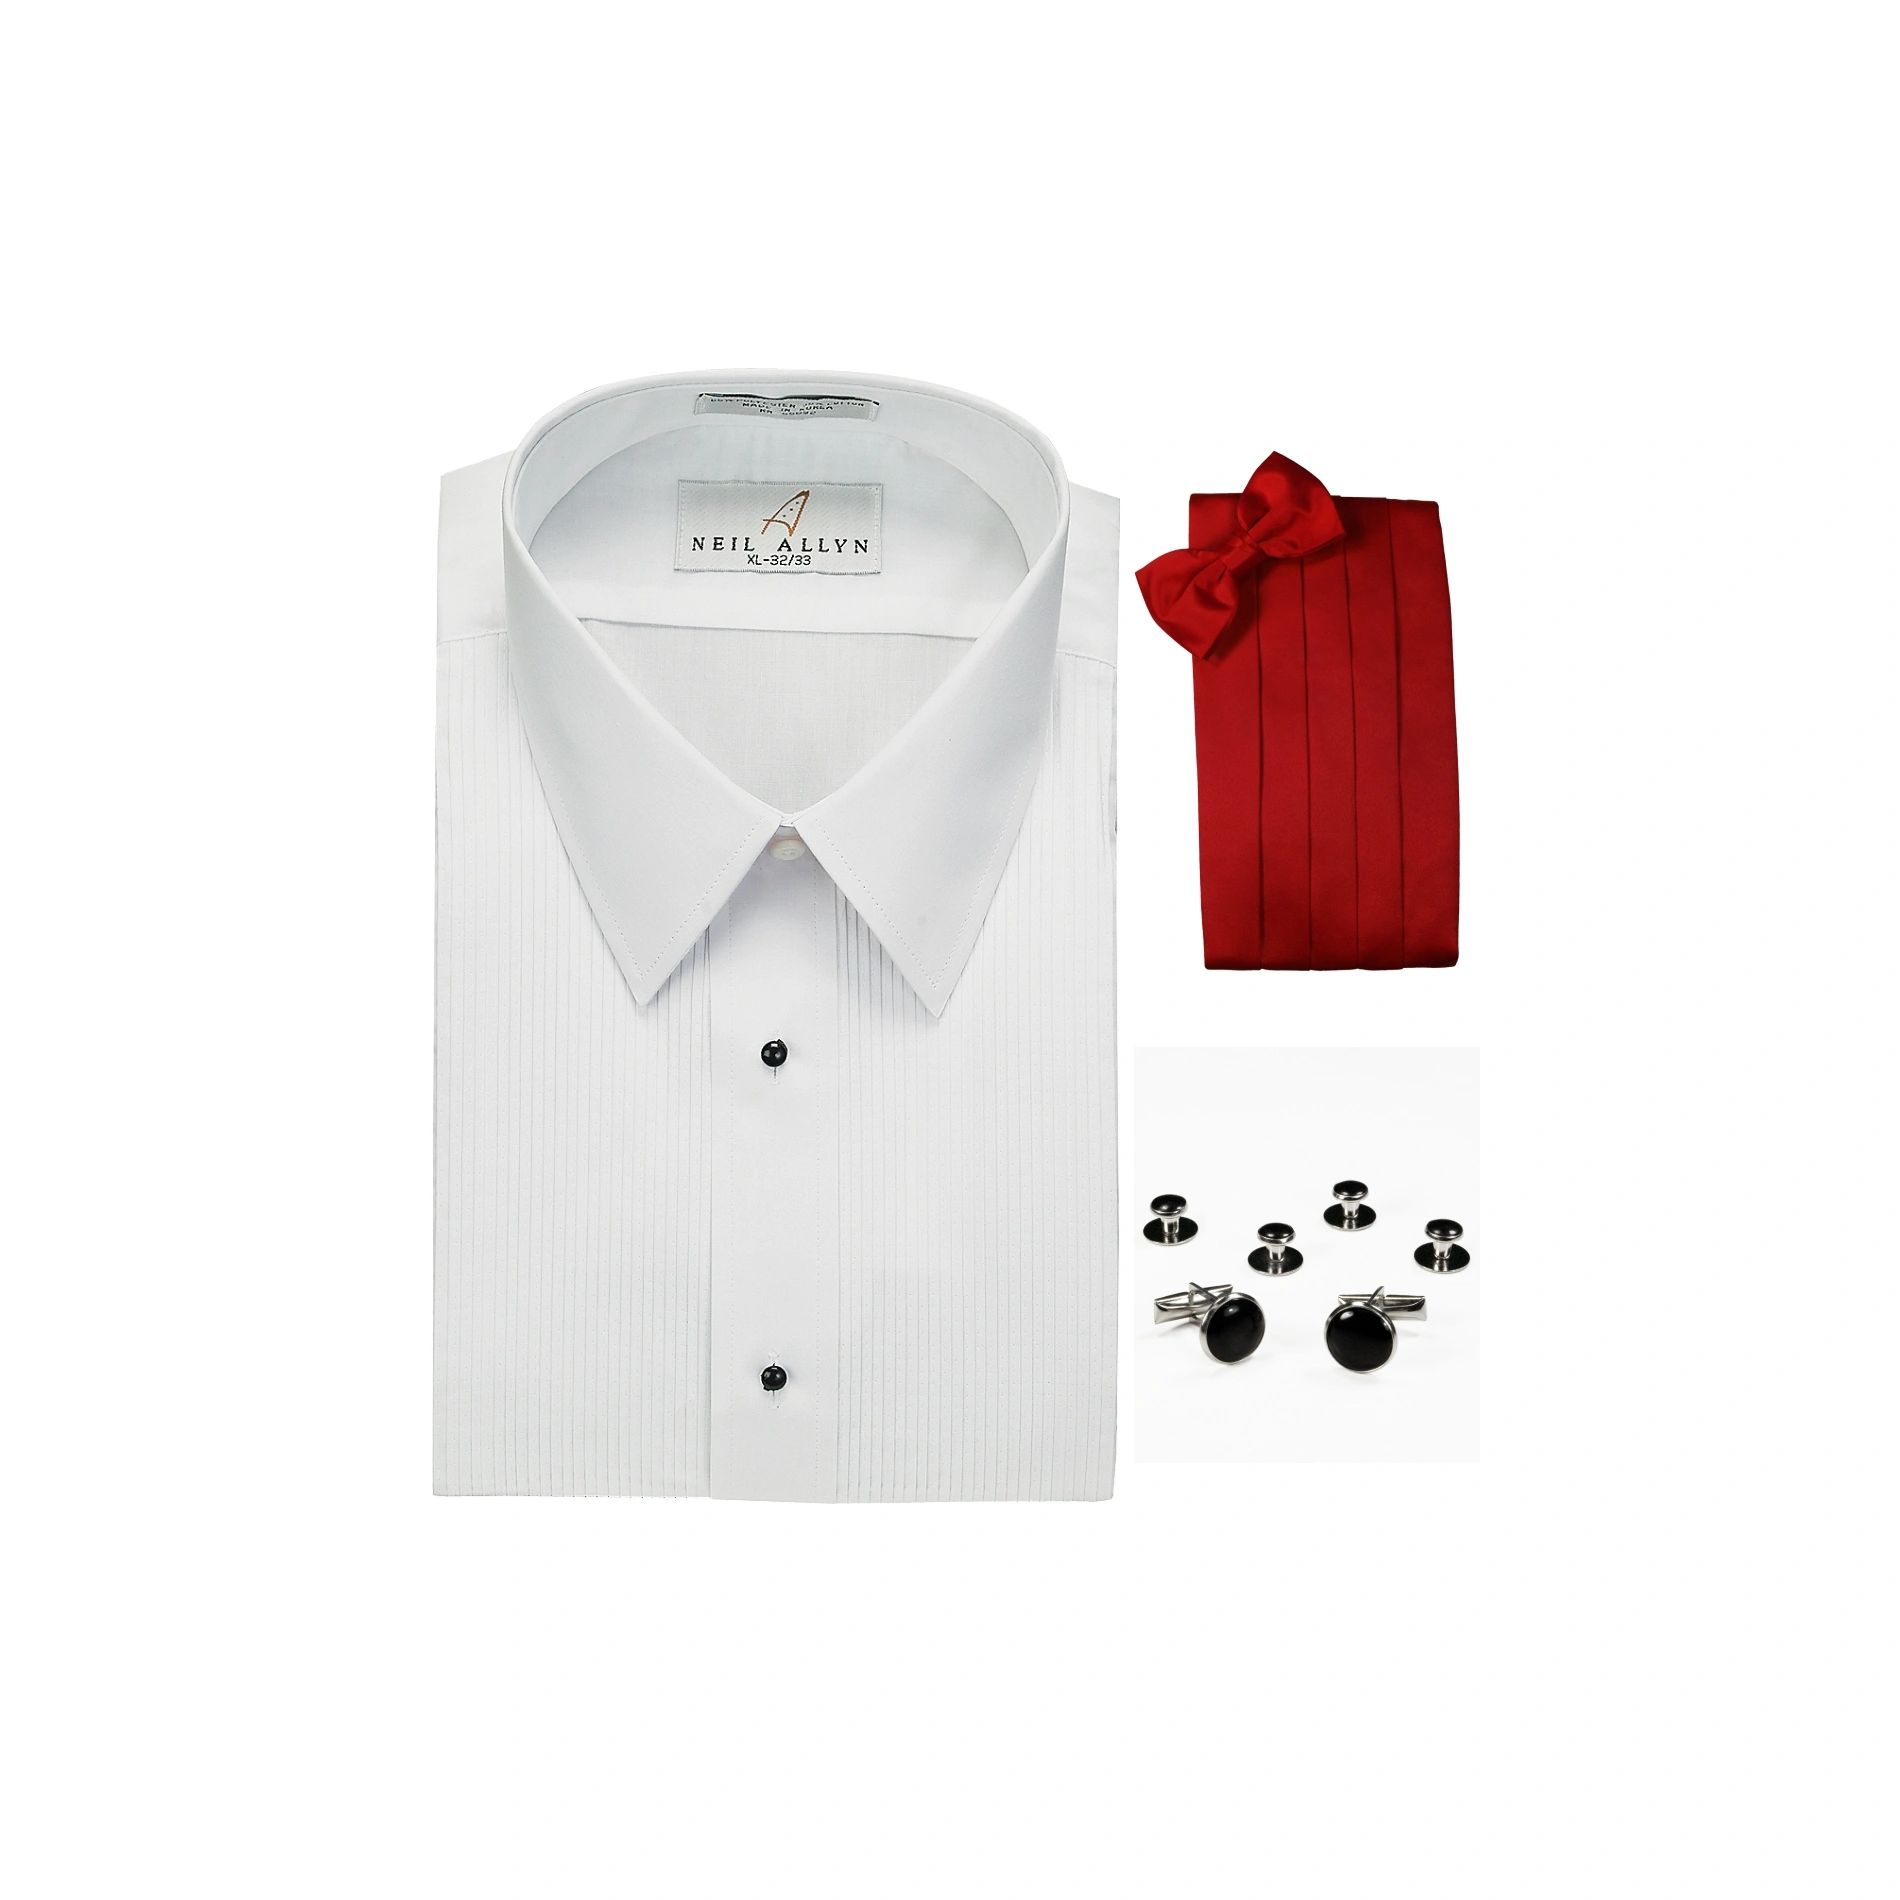 Neil Allyn Lay-Down Collar 1/8" Pleats Formal Tuxedo Shirt, Red Cummerbund, Bow-Tie, Cuff Links & Studs Set